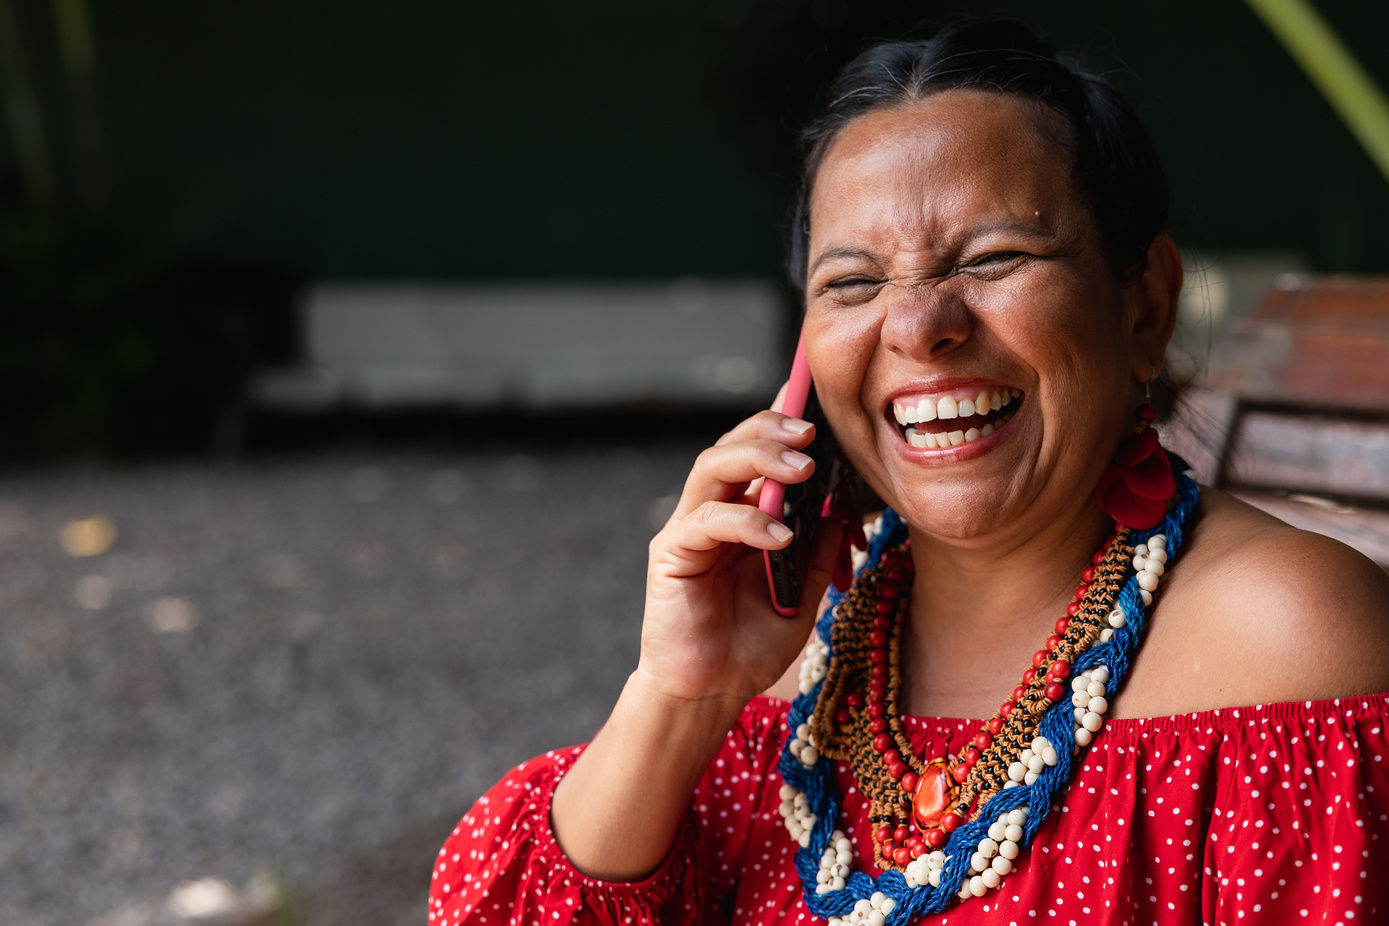 Brazilian Women Woman on a Phone Call